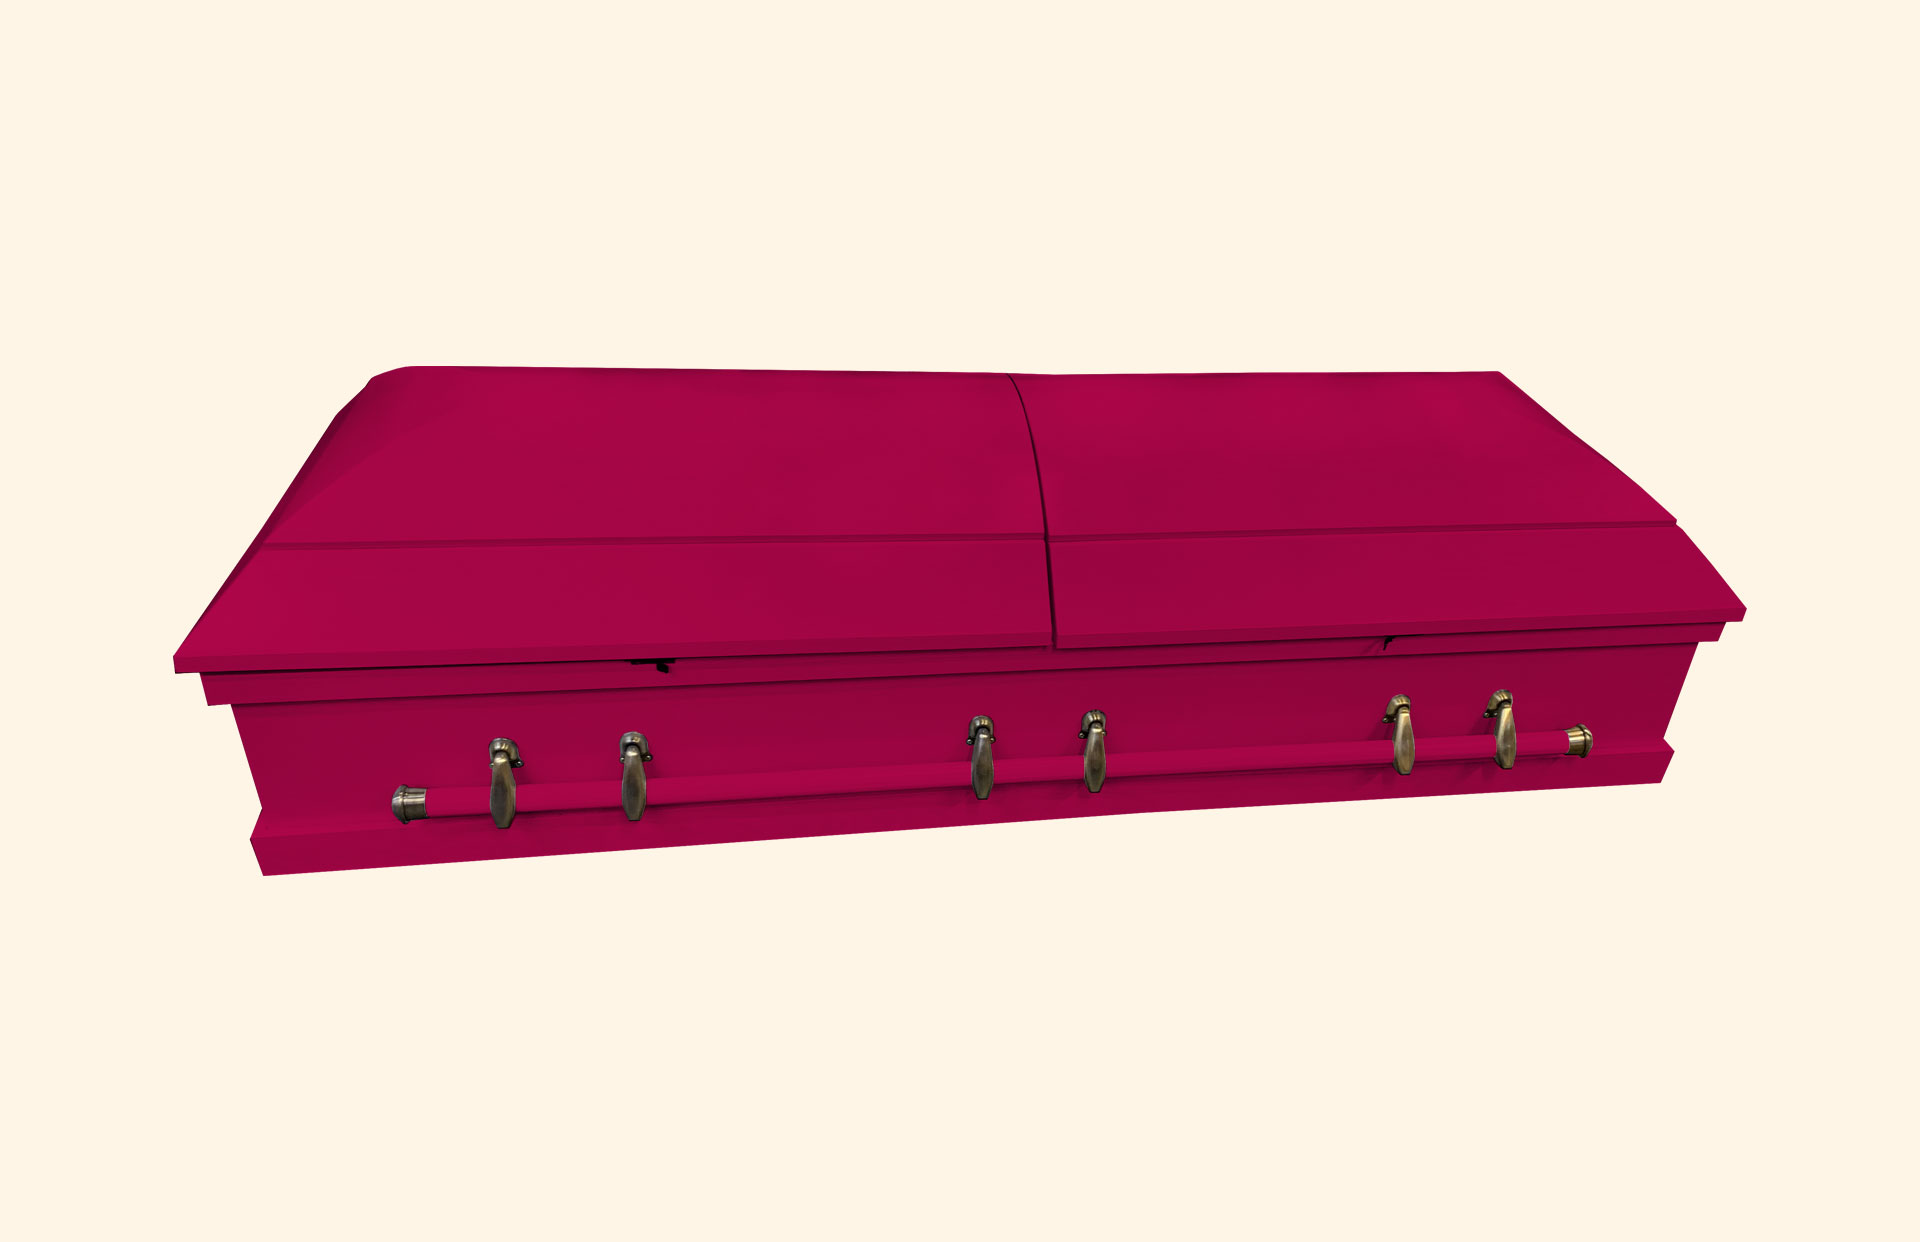 Alaska Solid Colour Pilar Box Red American wooden casket